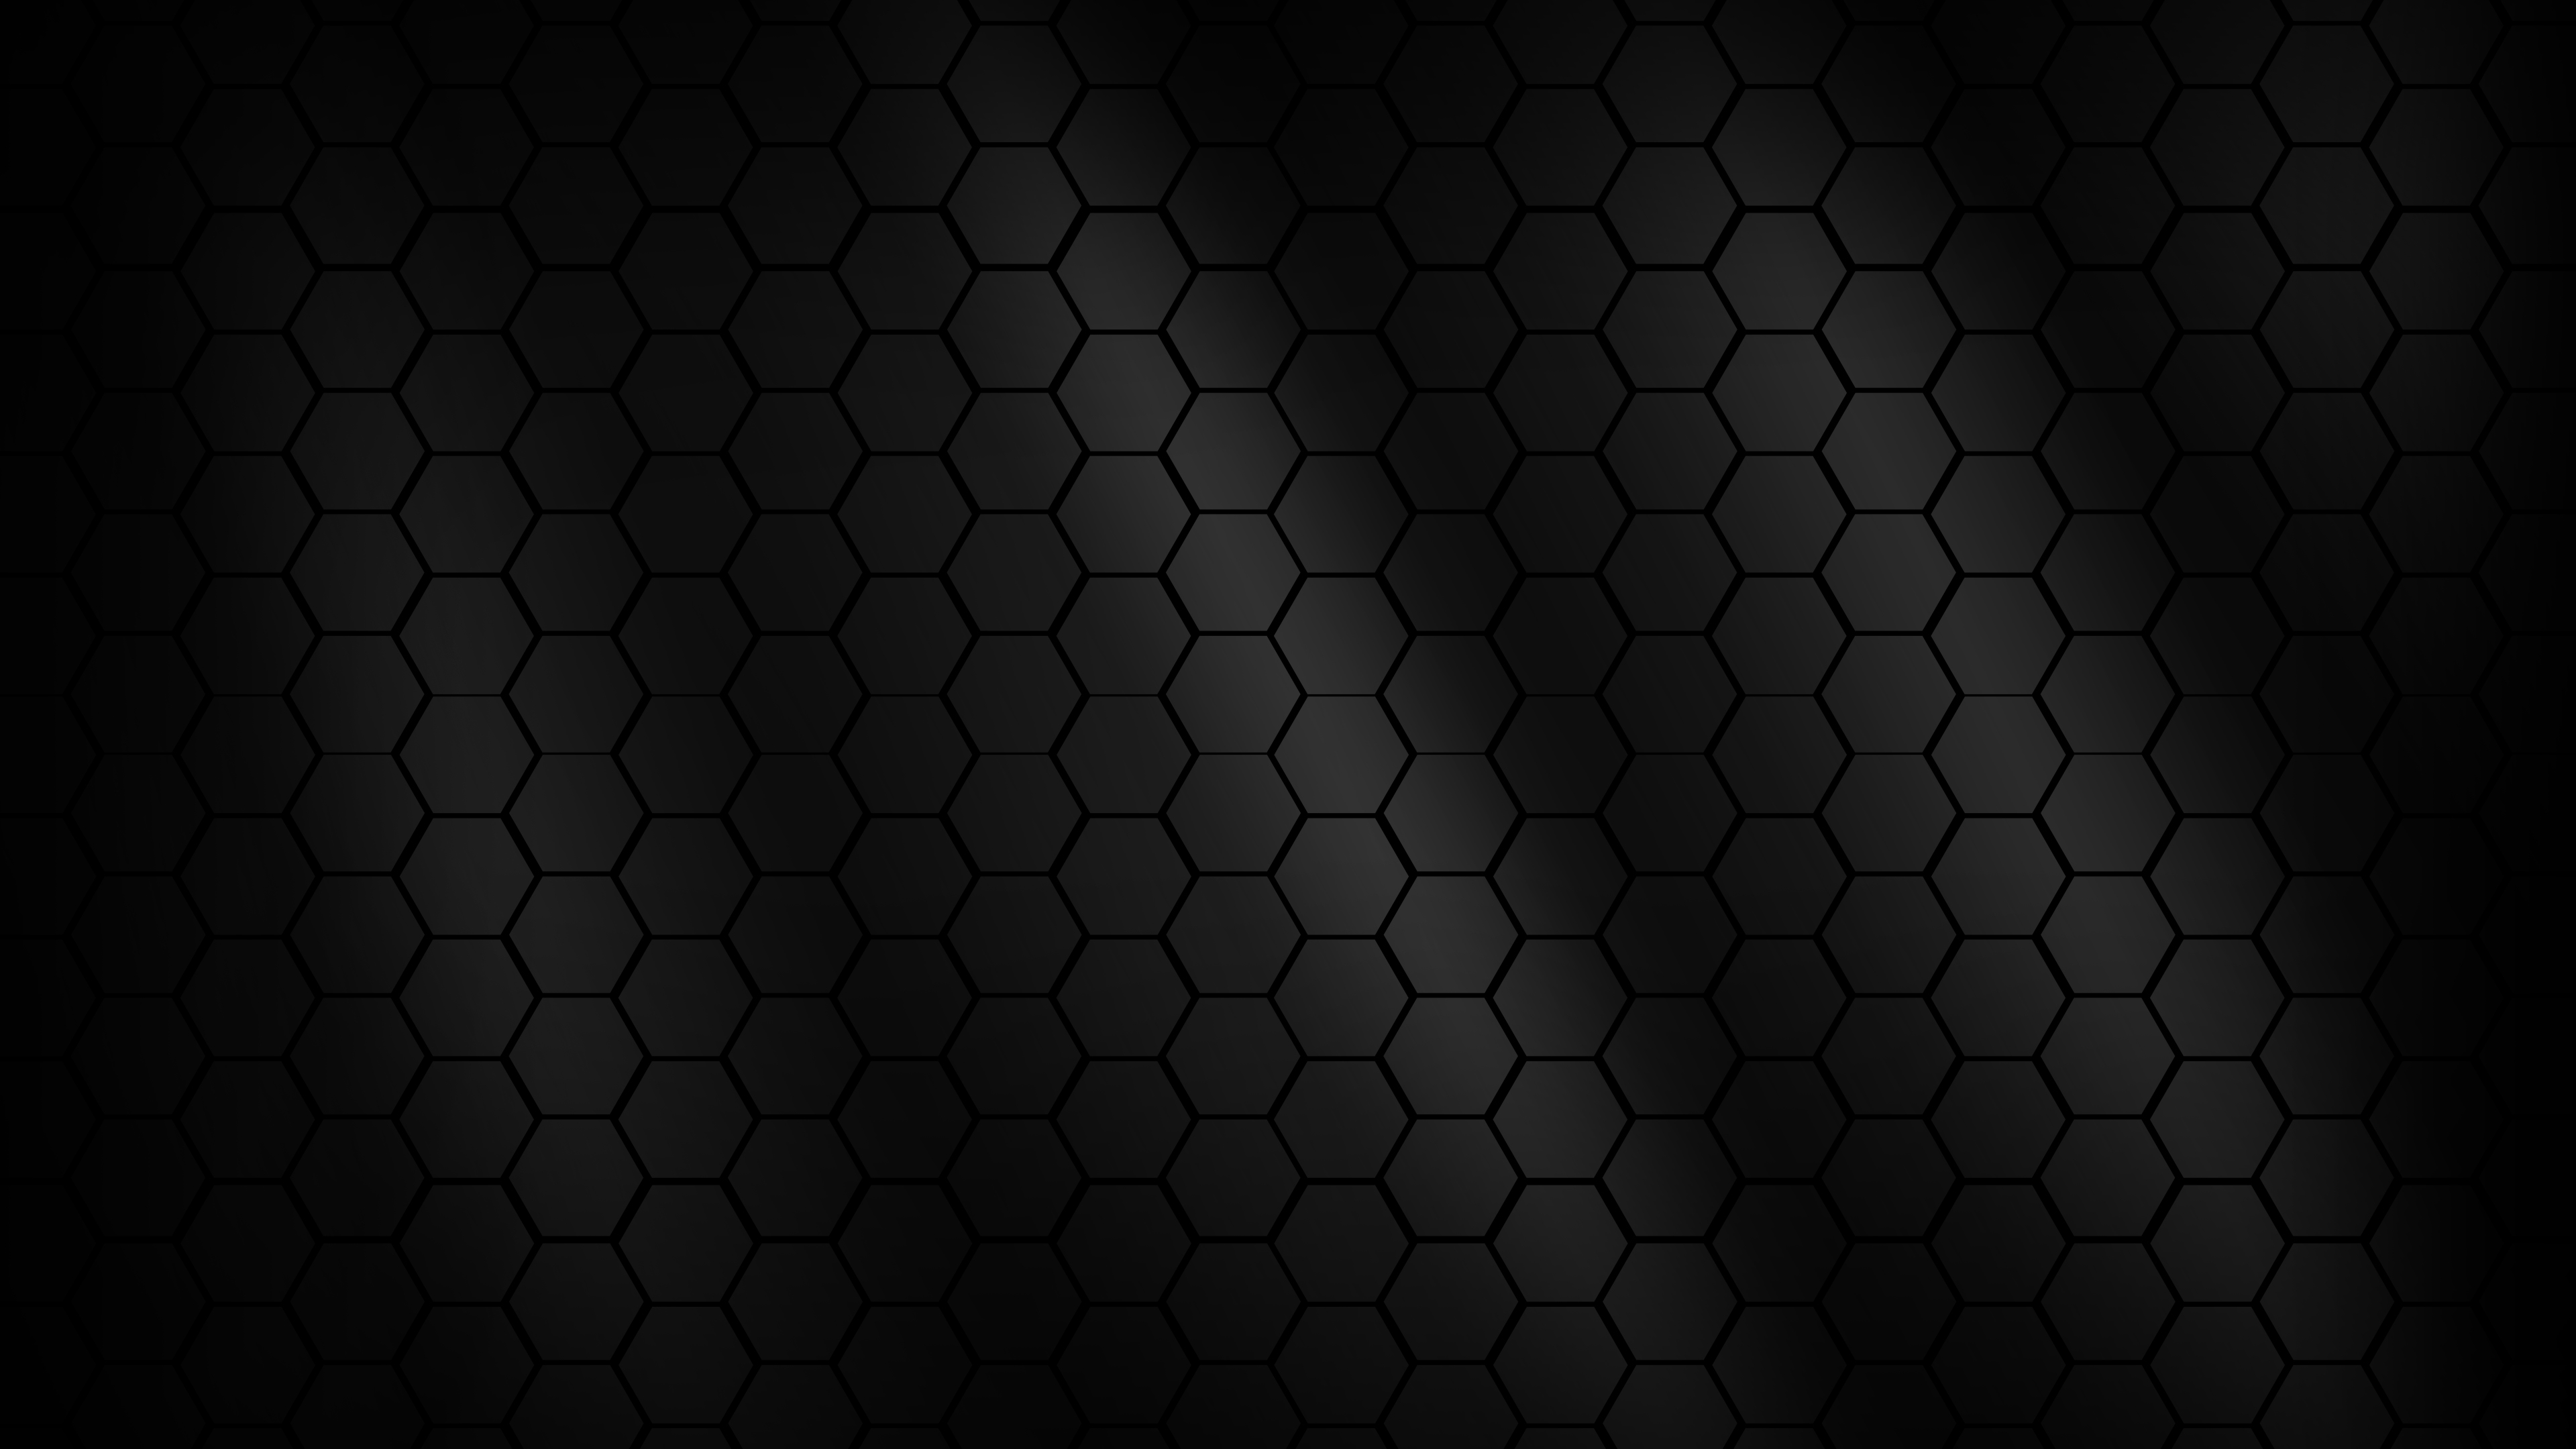 Black carbon fabric wallpaper for gamer - veeForu